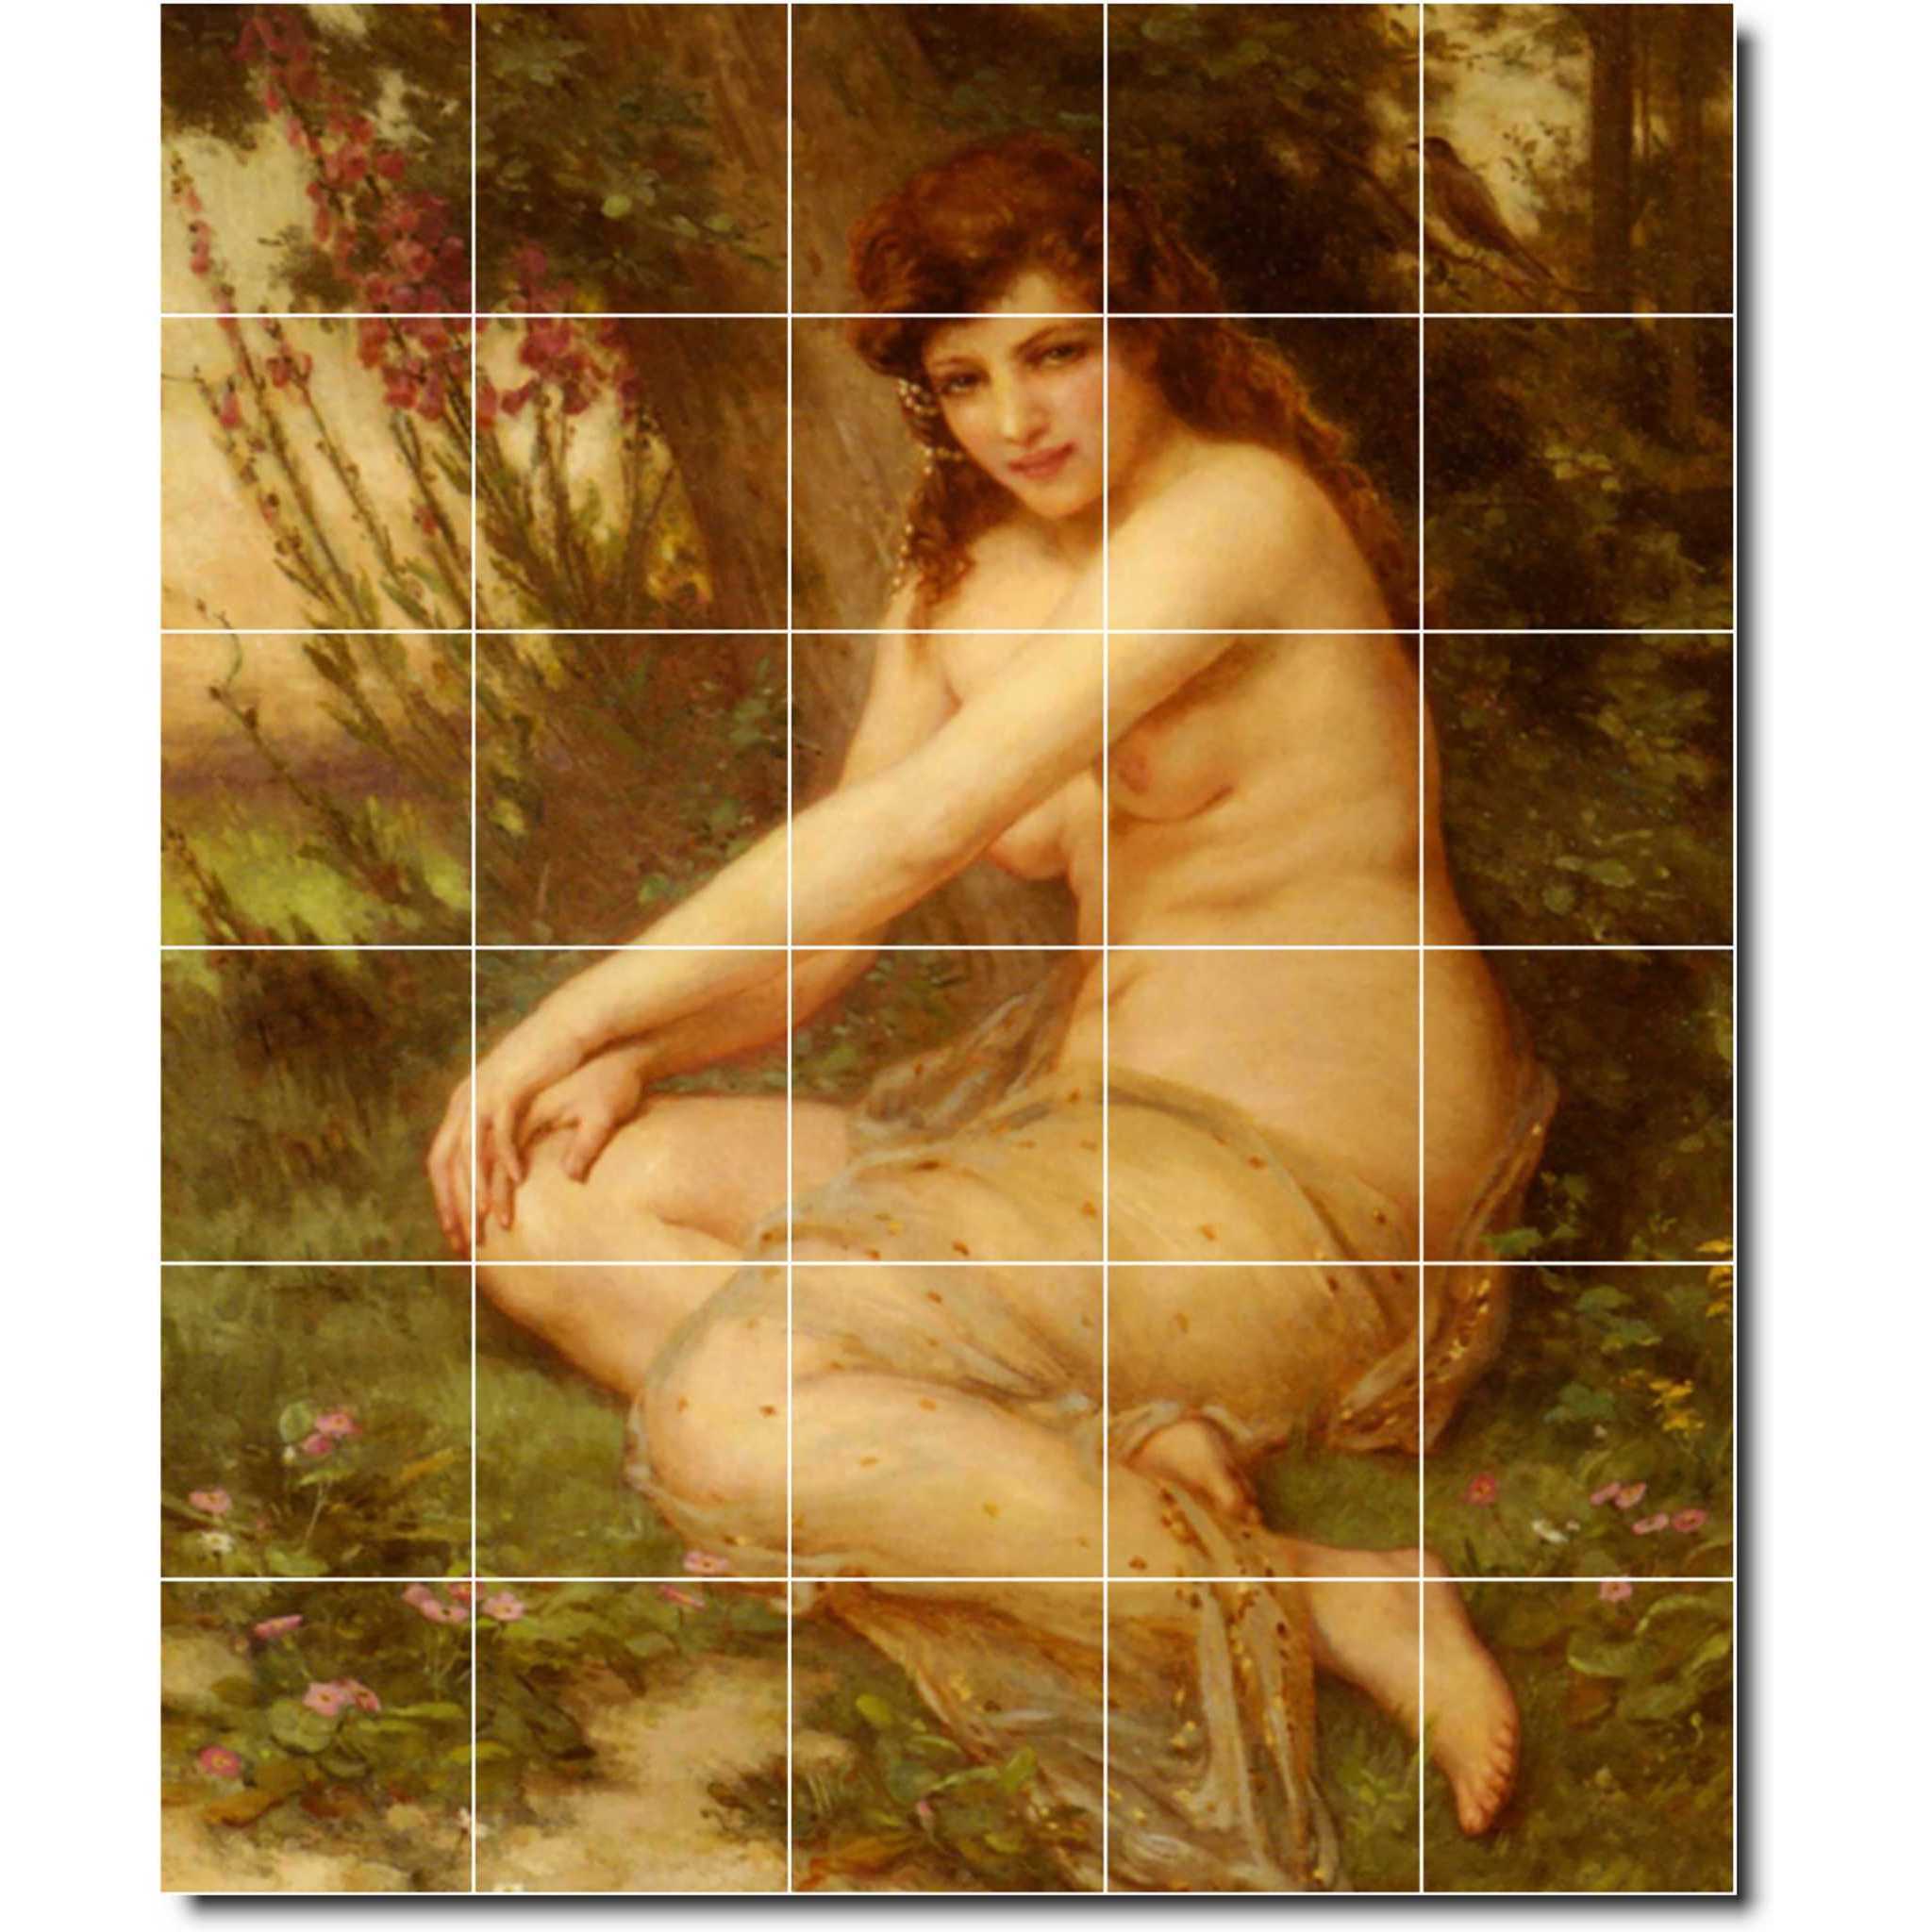 guillaume seignac nude painting ceramic tile mural p08274